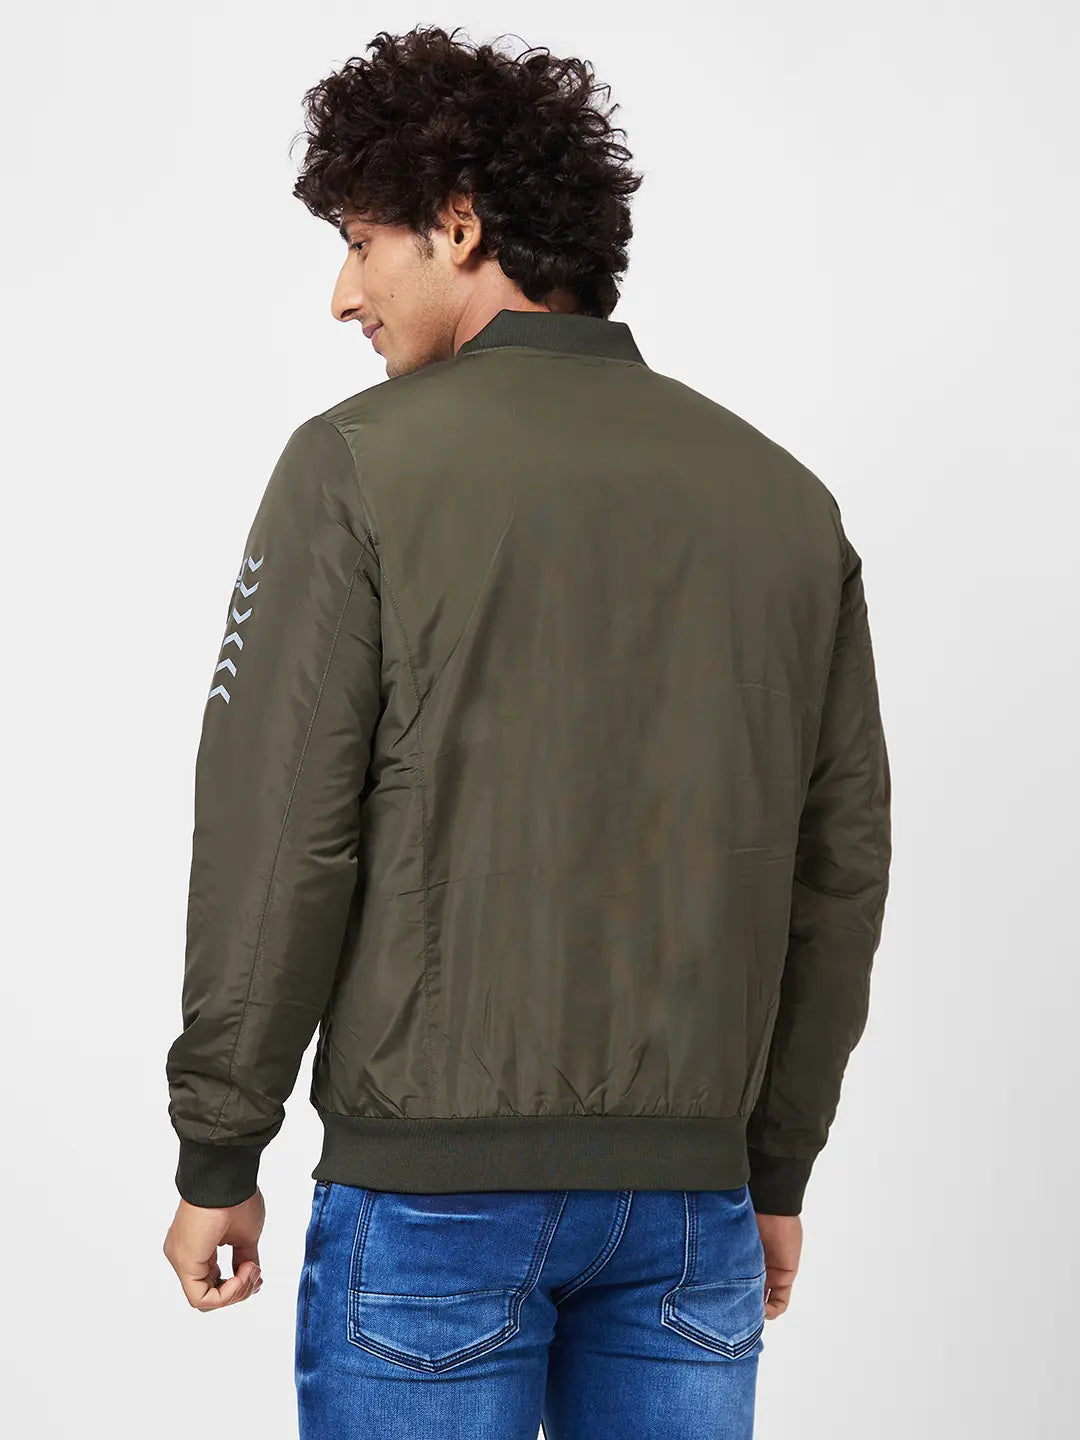 Buy Men's Packable Down Jacket, Puffer Jacket Lightweight Warm Puffer Coat,  Stand Collar- Dark Navy, Medium at Amazon.in